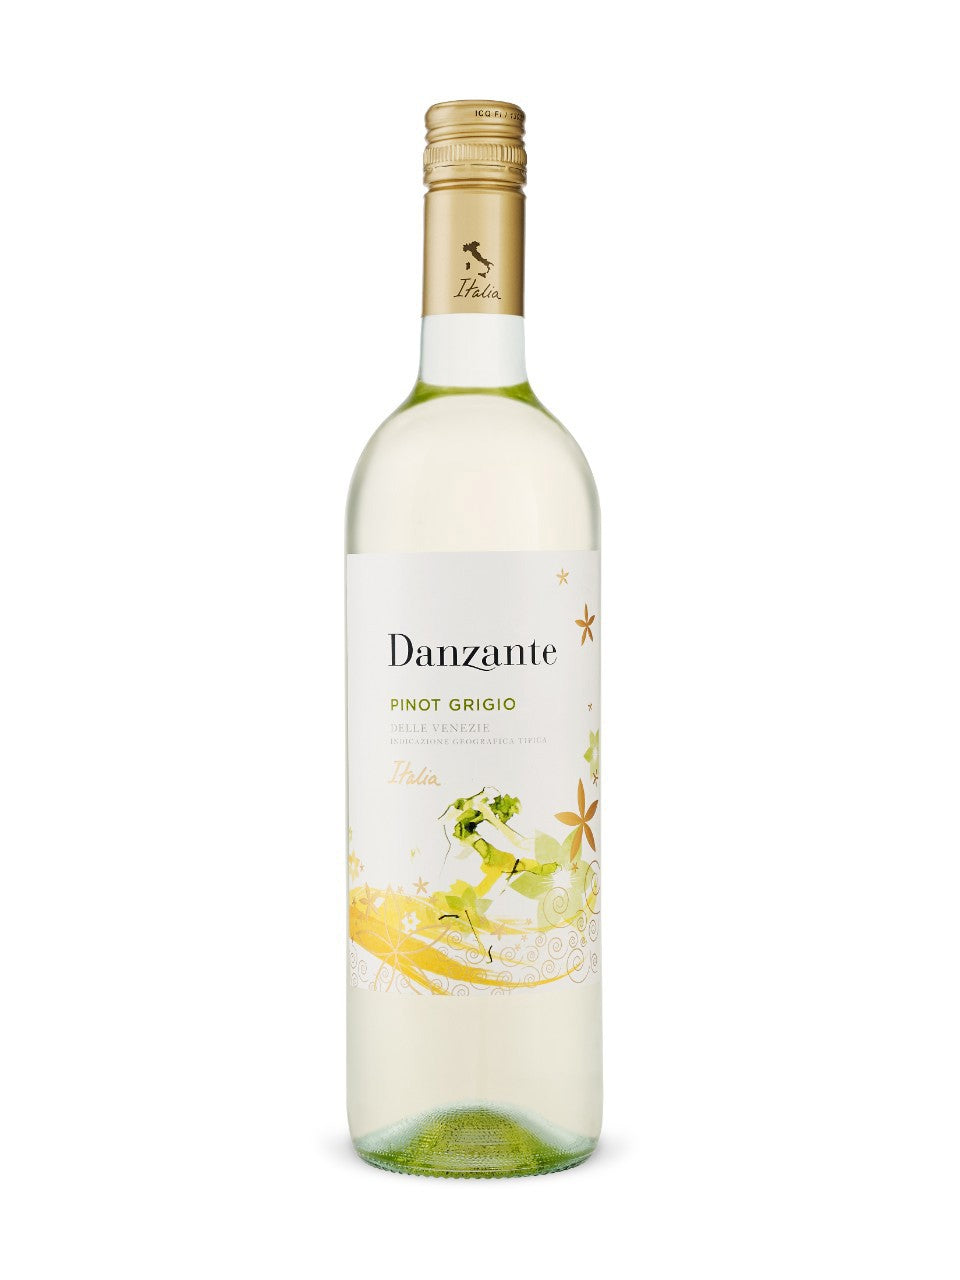 Danzante Pinot Grigio Delle Venezie IGT 750 mL bottle